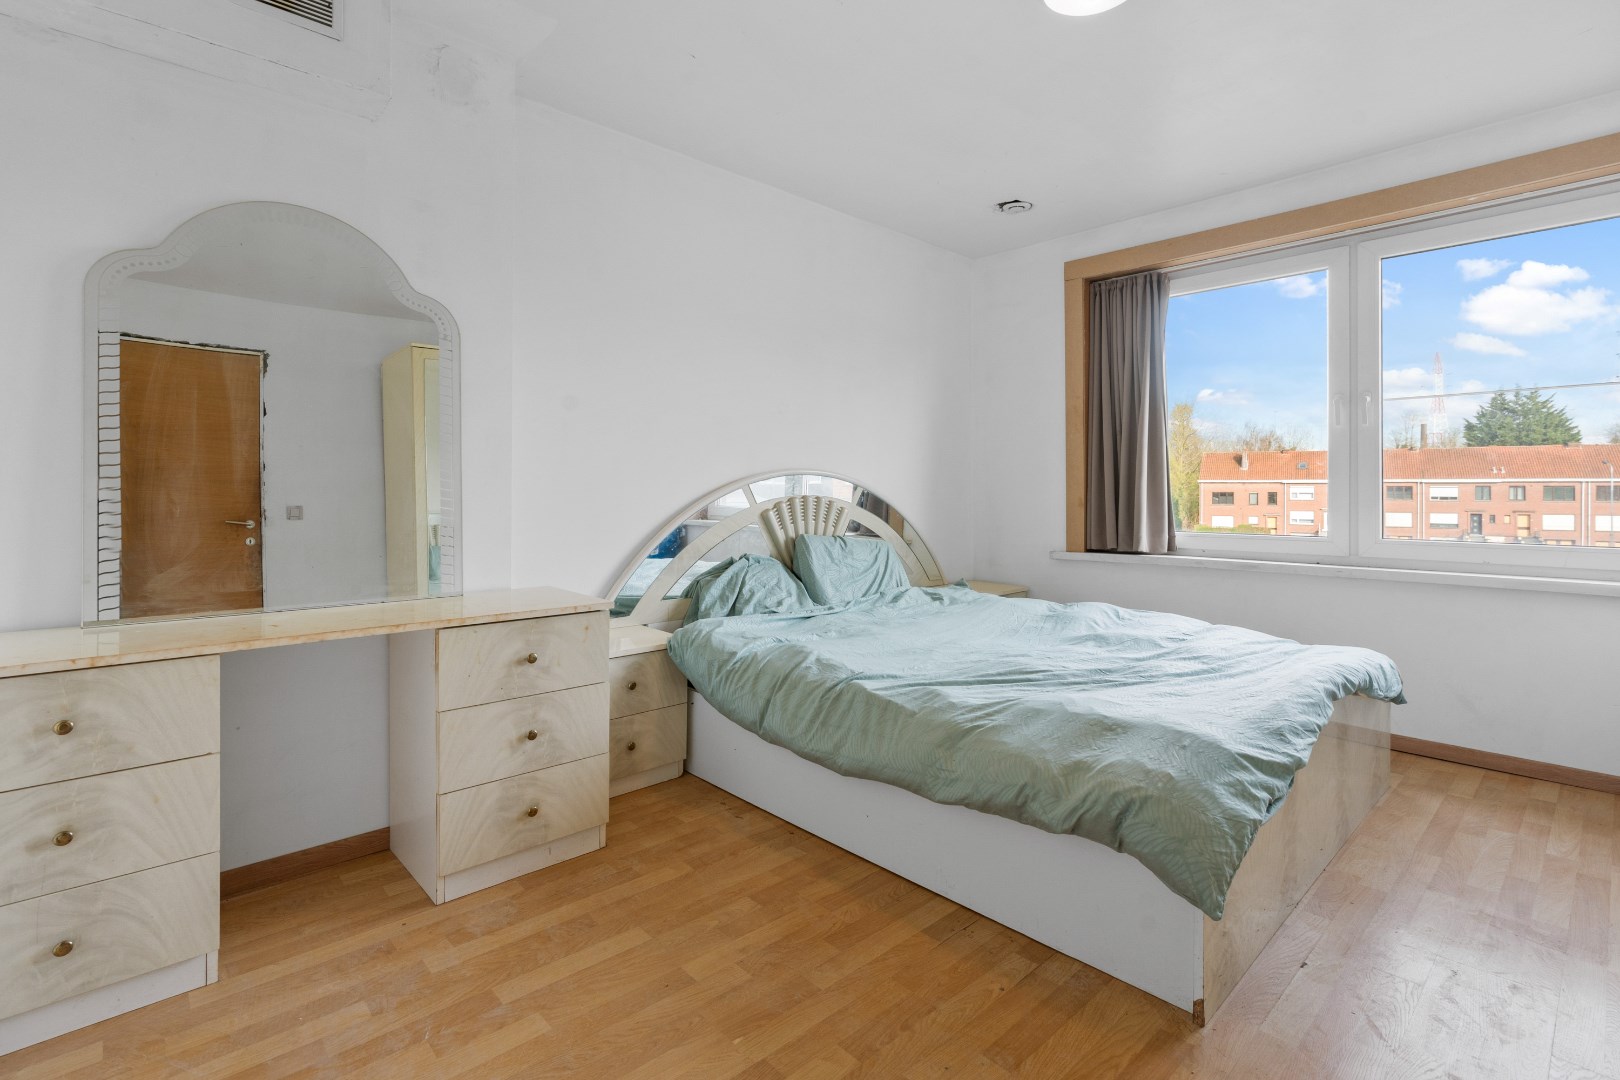 Statige woning met 3 slaapkamers in Kortrijk foto 7